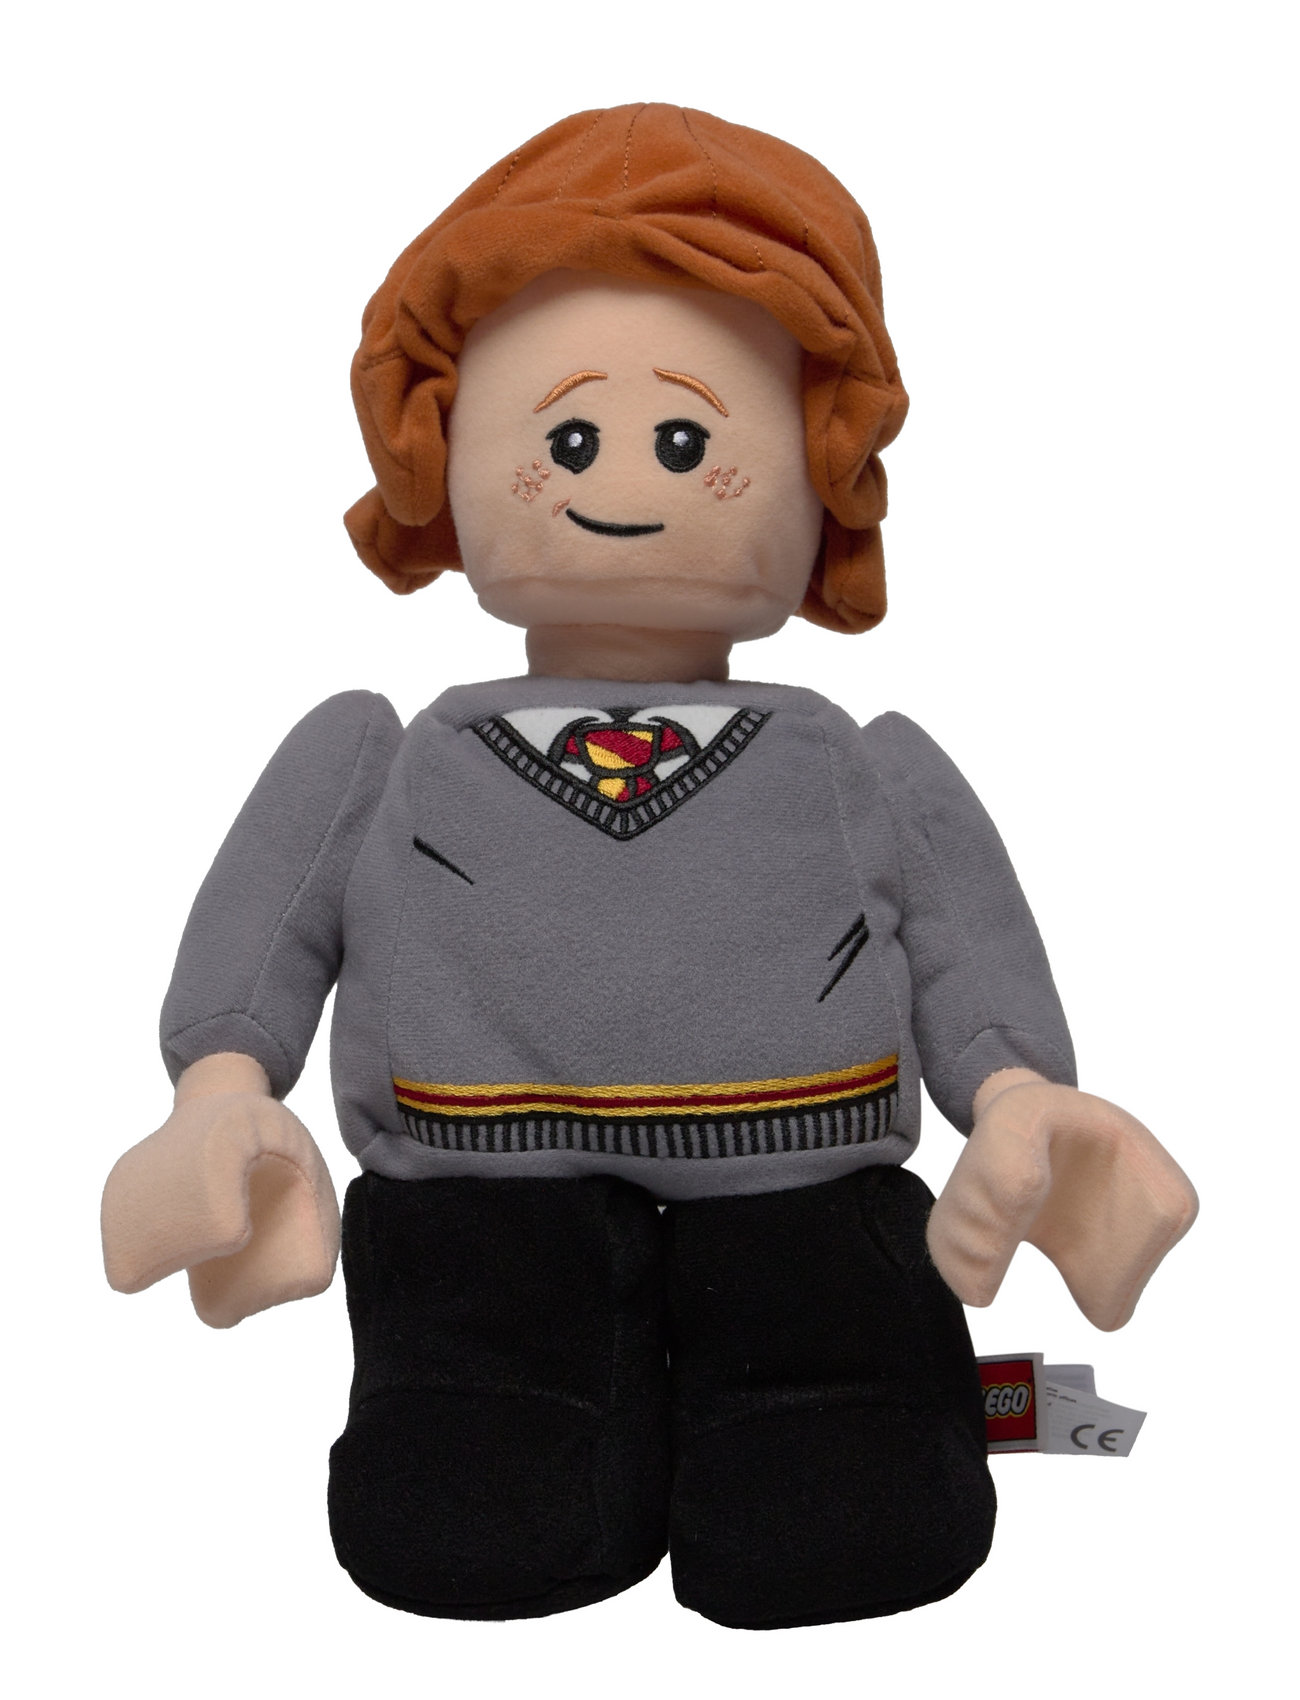 Lego Ron Weasley Plush Toy Toys Soft Toys Stuffed Toys Multi/patterned Harry Potter